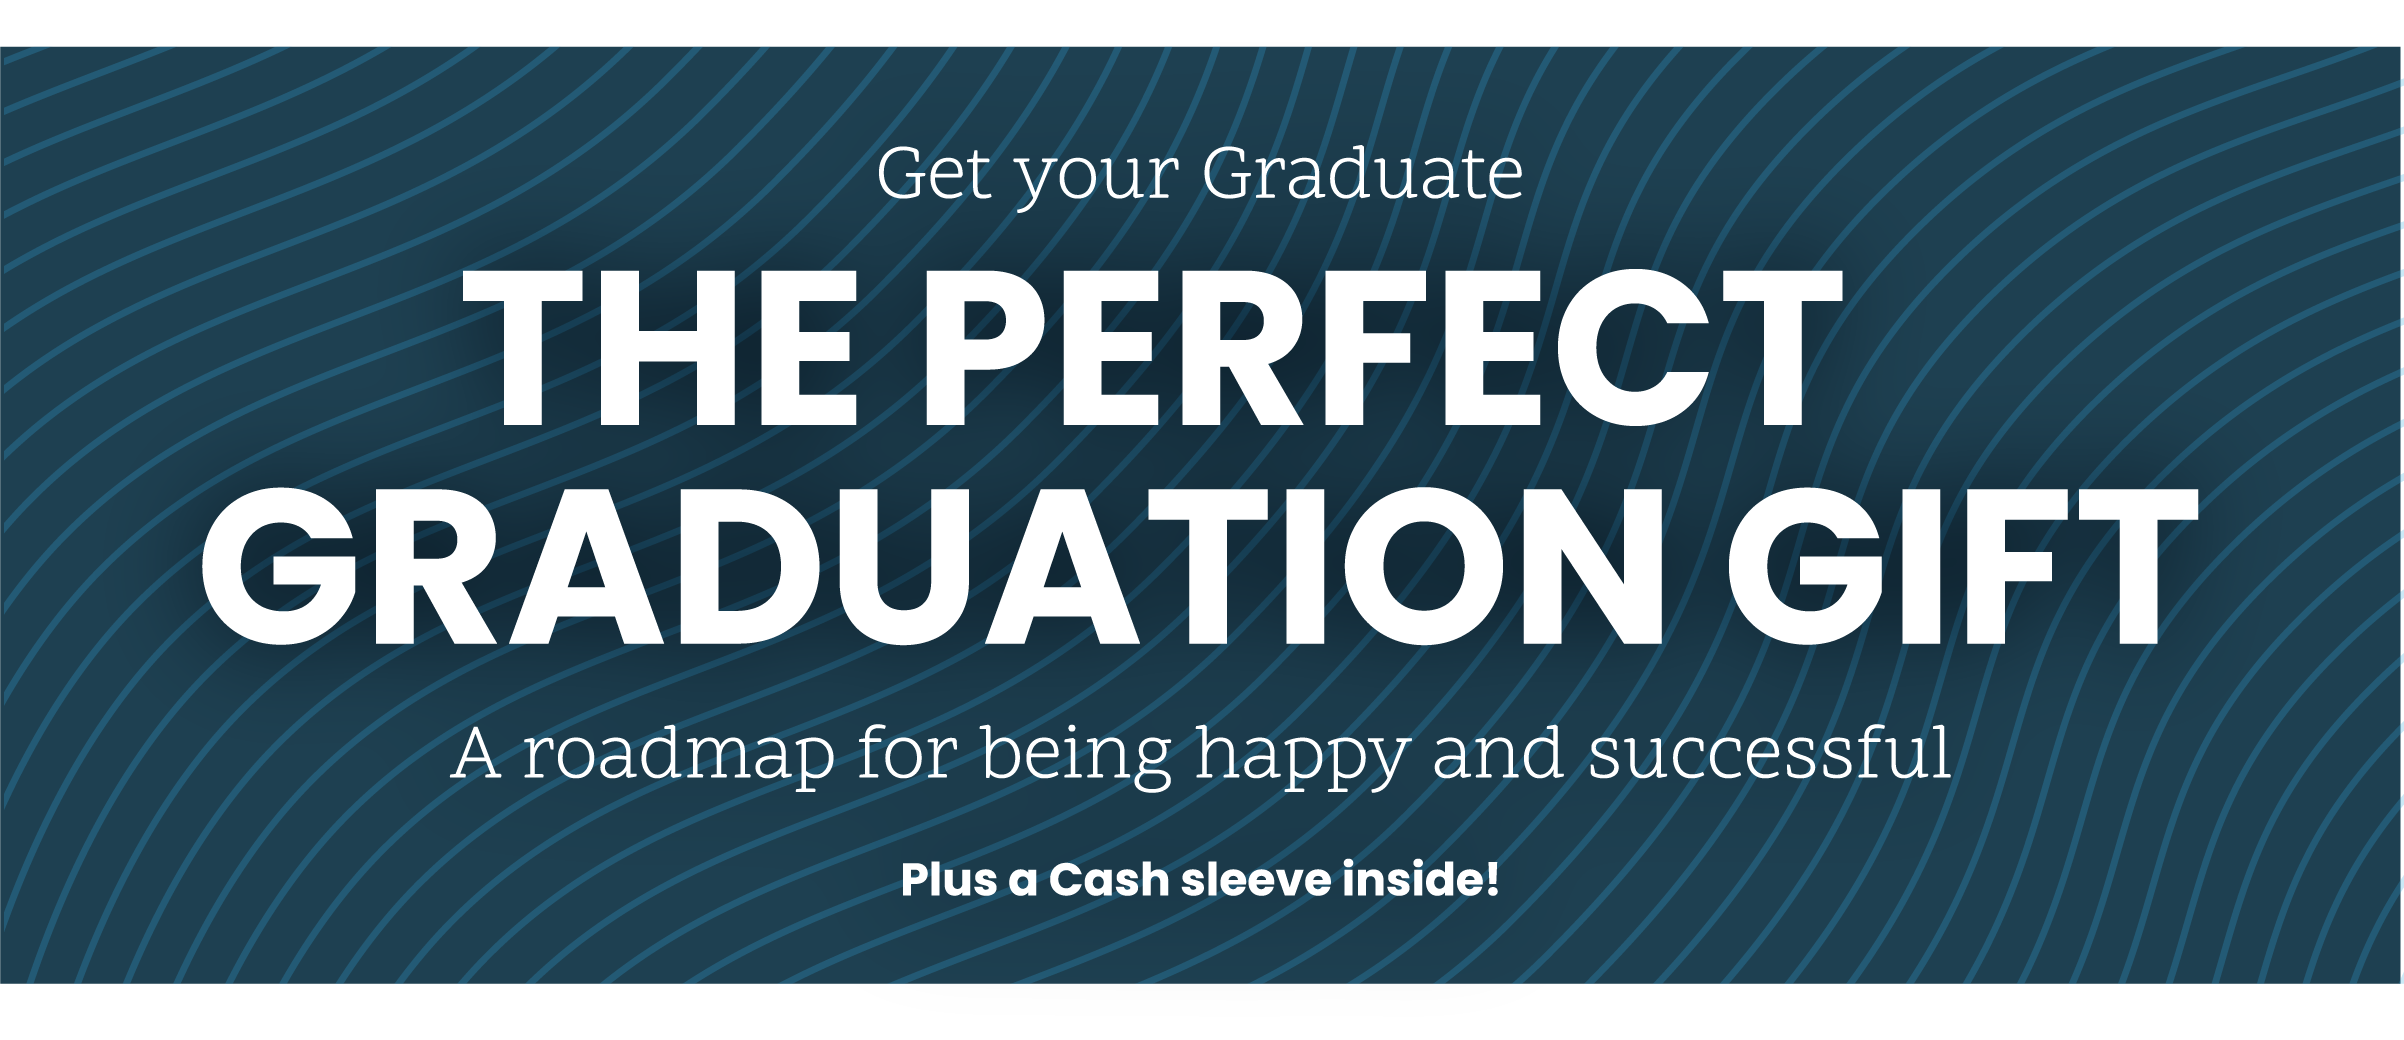 Get Your Graduate the Perfect Graduation Gift - A Graduate's Handbook